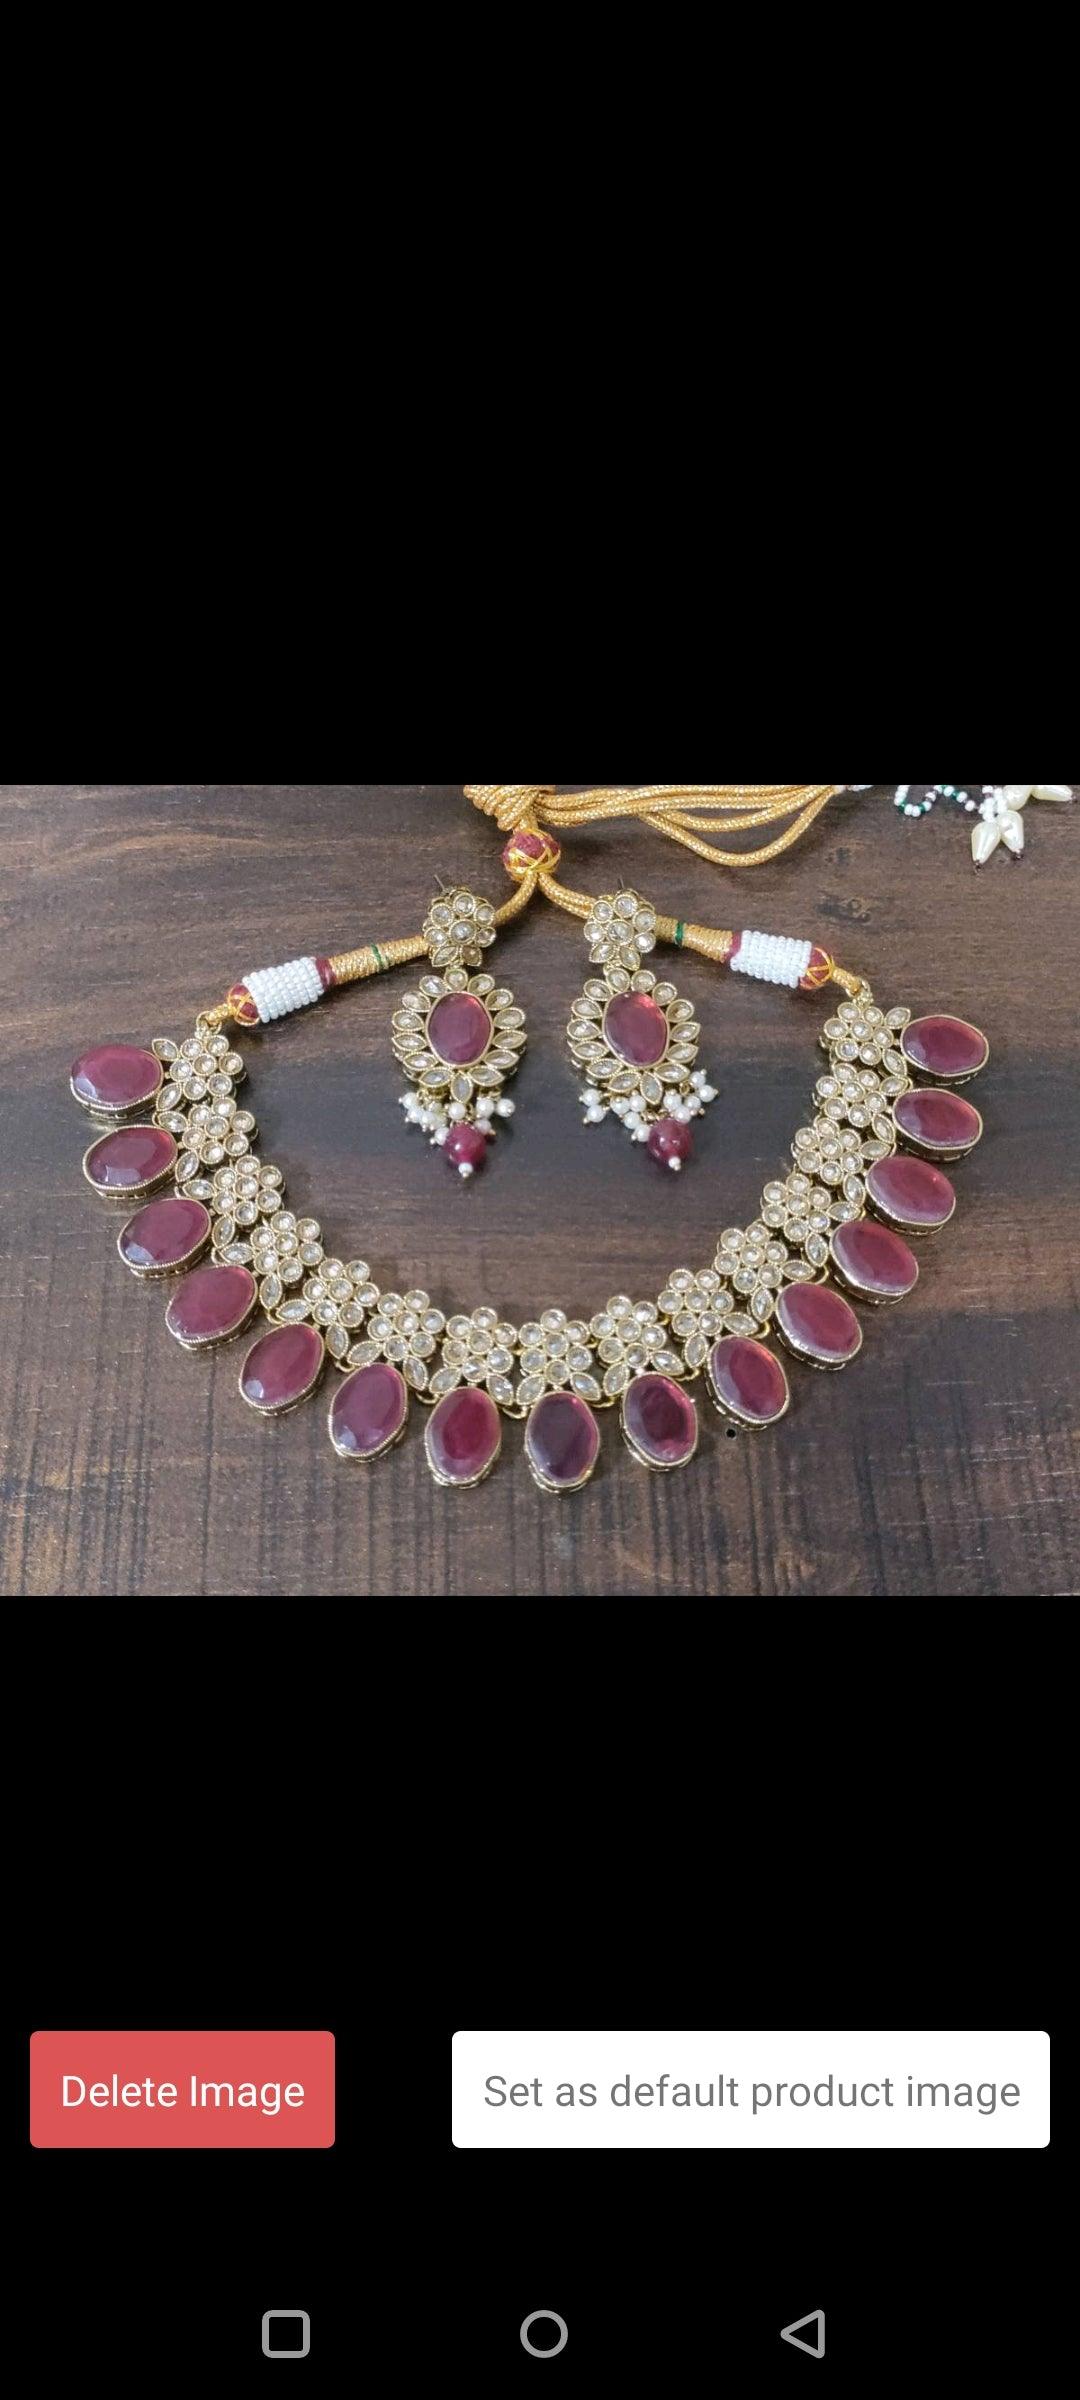 Monalisa necklace mehendi -5785 B2 - rchiecreation